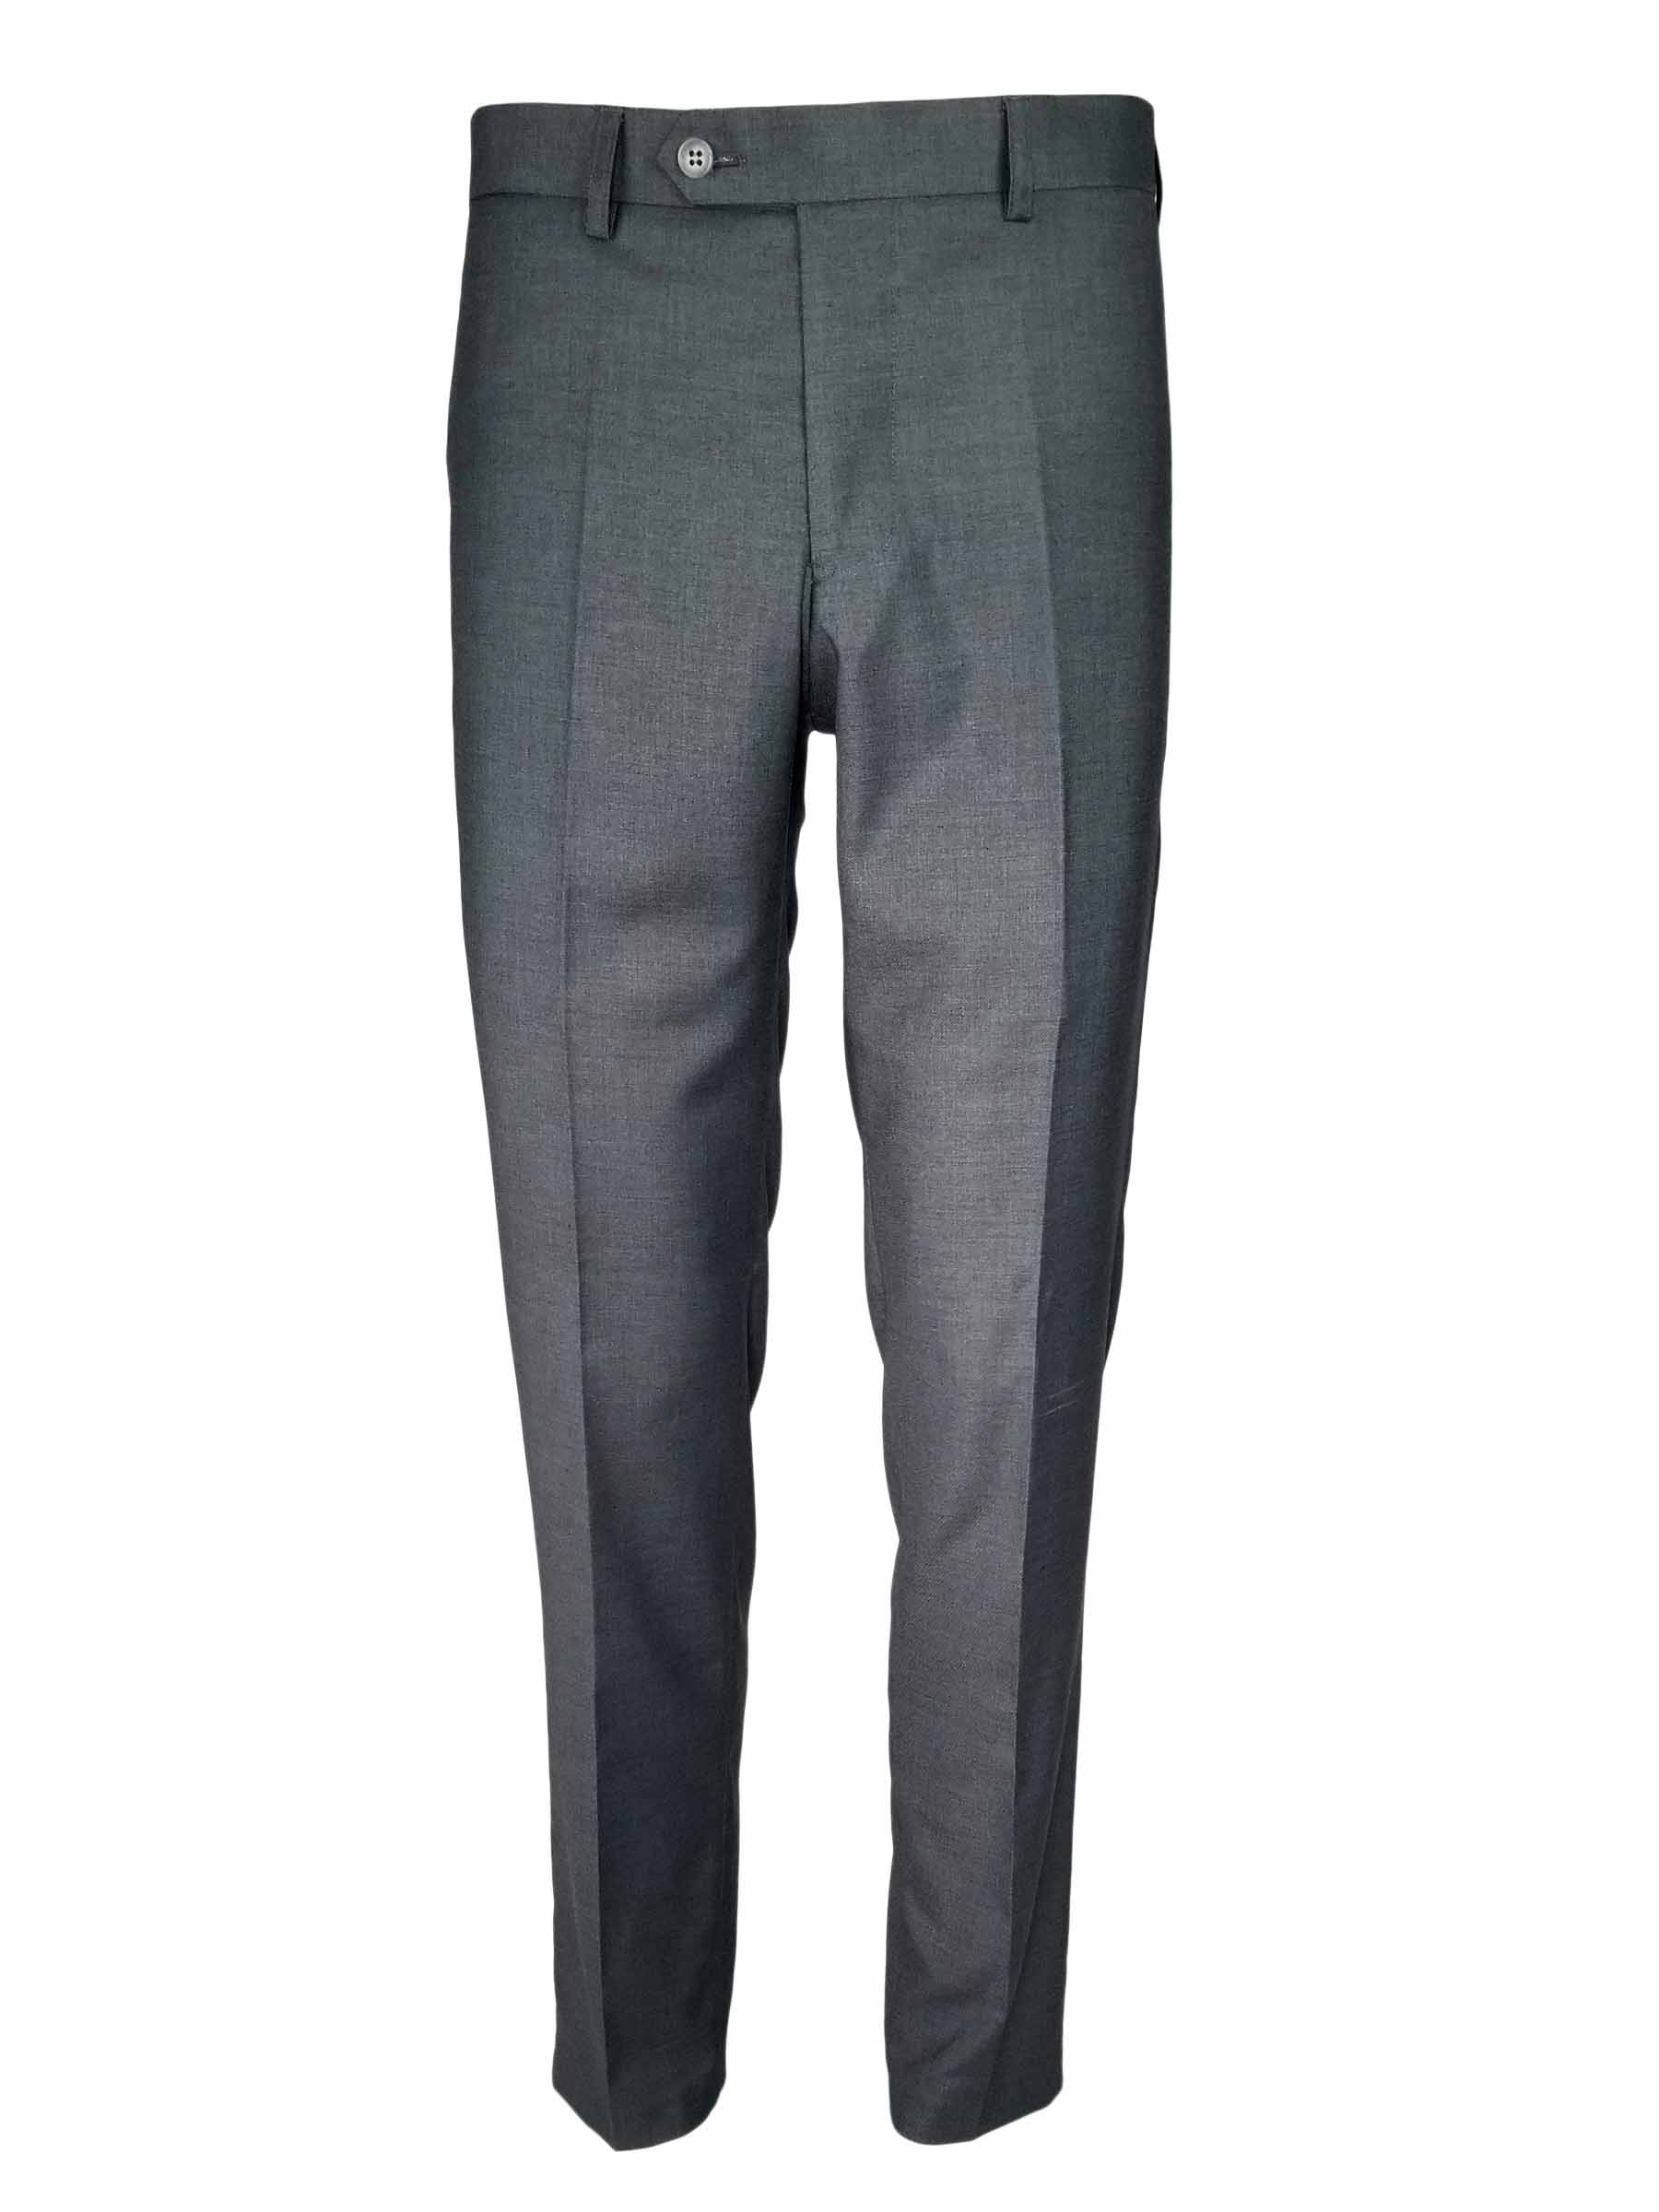 https://www.theuniformedit.com.au/app/uploads/2019/03/Mens-Uniform-Classic-Pant-Light-Grey-Wool-Poly-blend-3016-Lowres.jpg